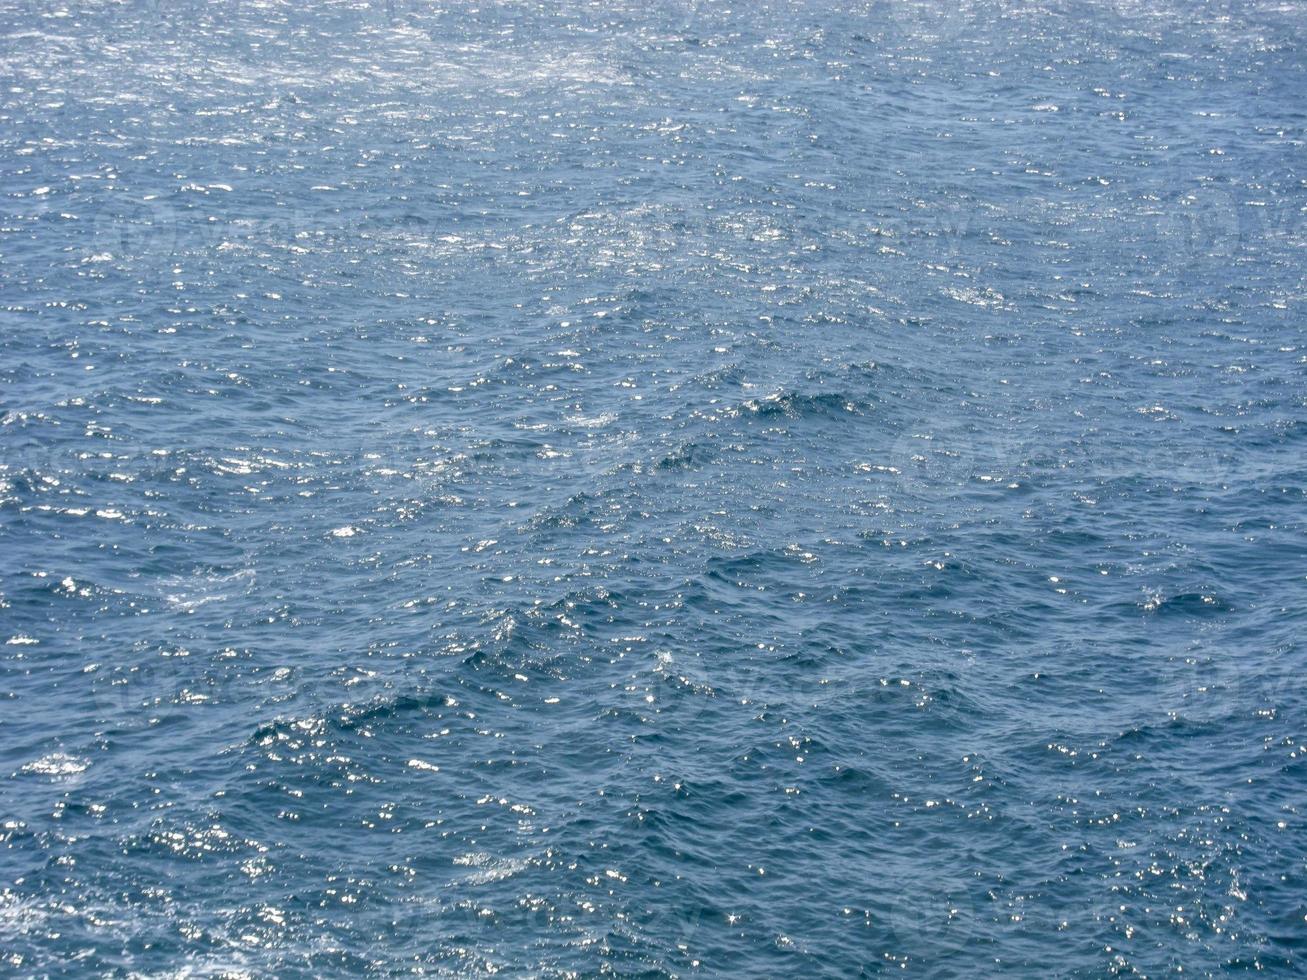 Sea water close-up photo